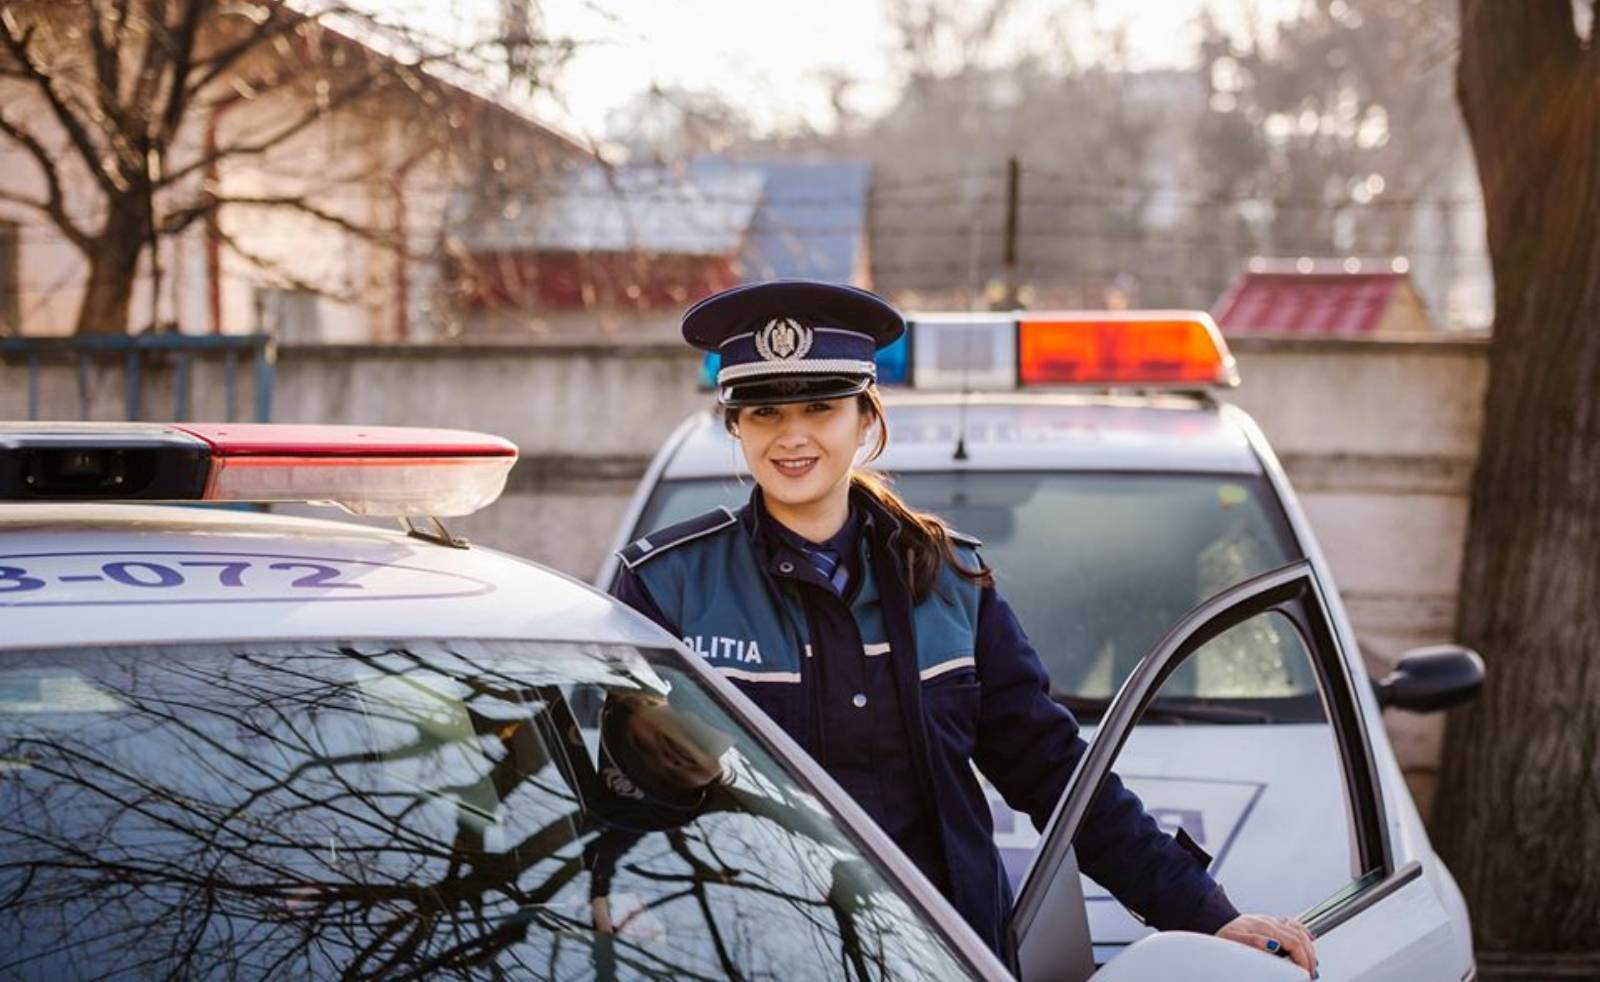 Romanian police reform